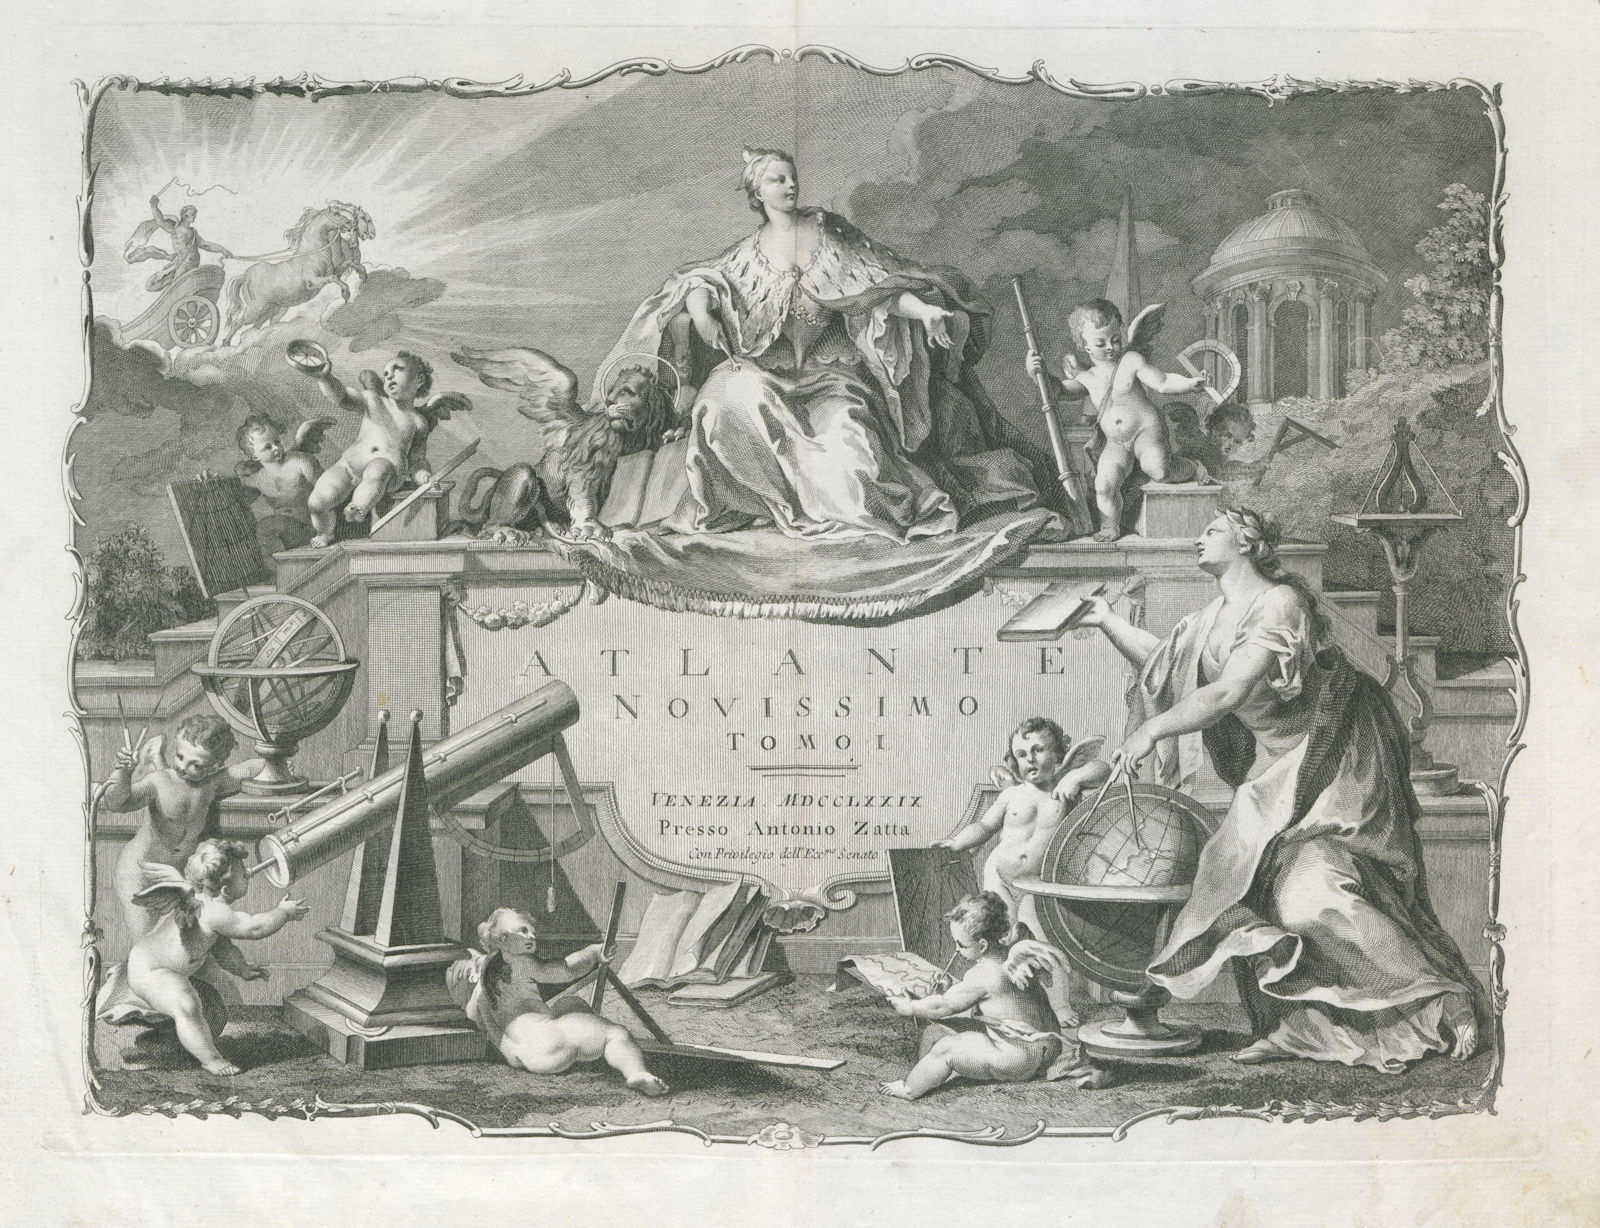 Decorative frontispiece to Antonio Zatta's Atlante Novissimo. Tomo I 1779